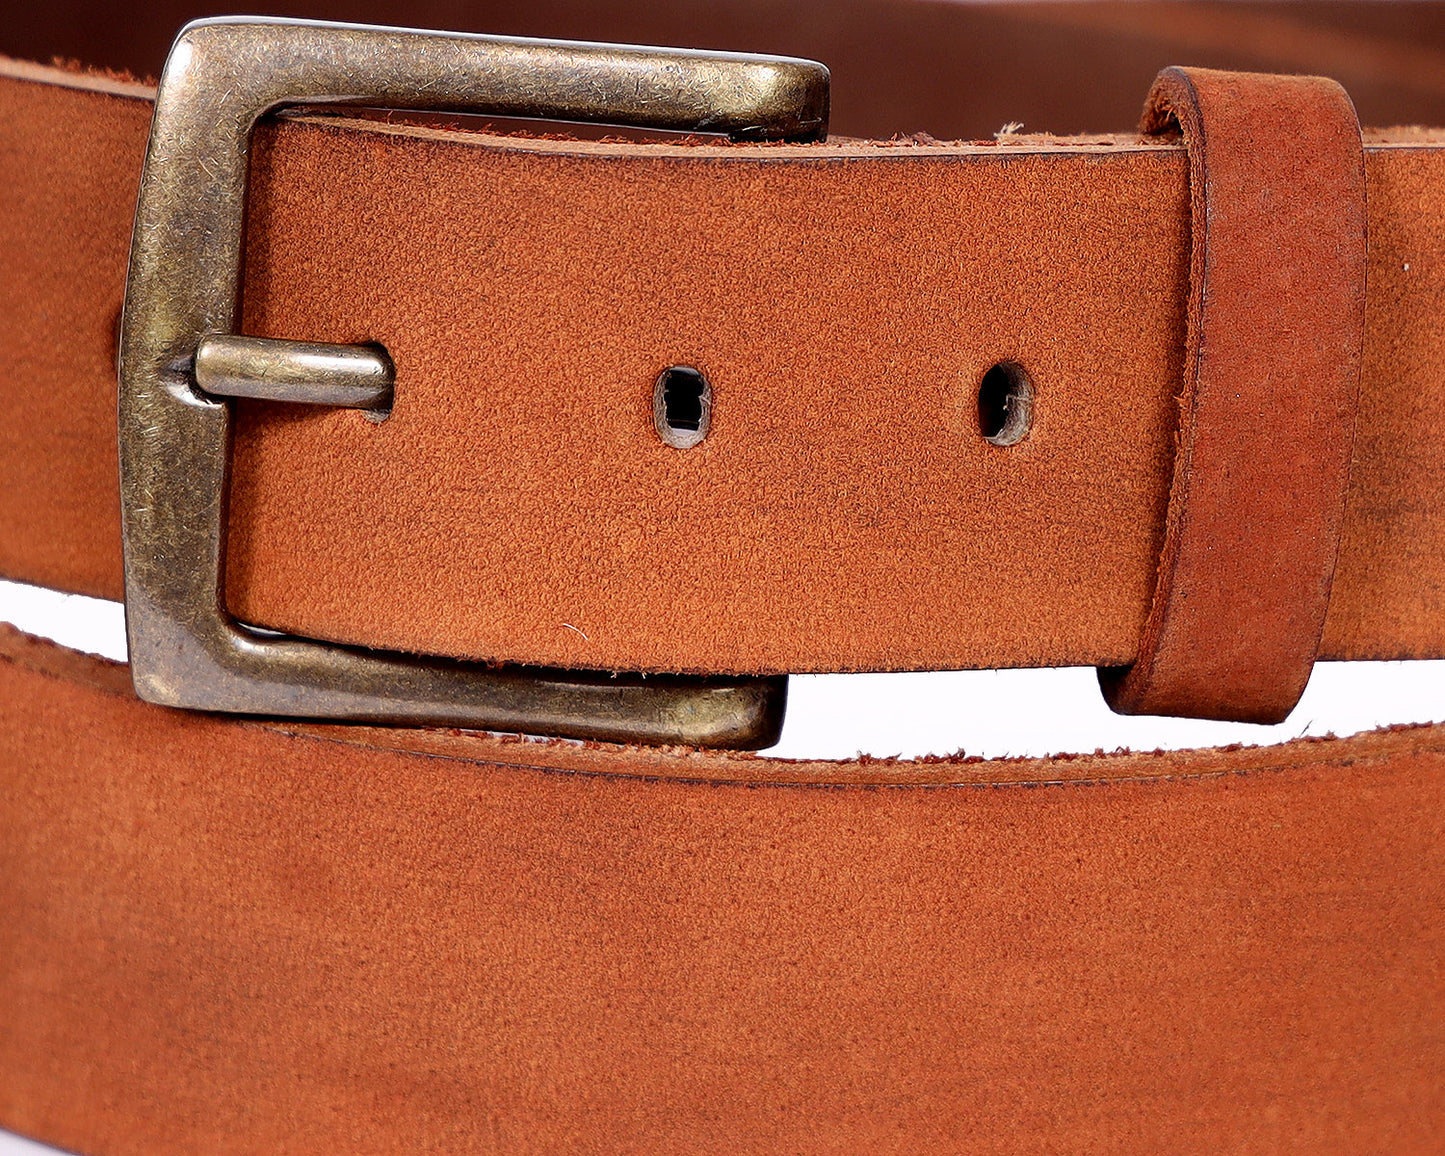 Celtic Premium Light Brown Leather Belt With Golden Buckle - CELTICINDIA